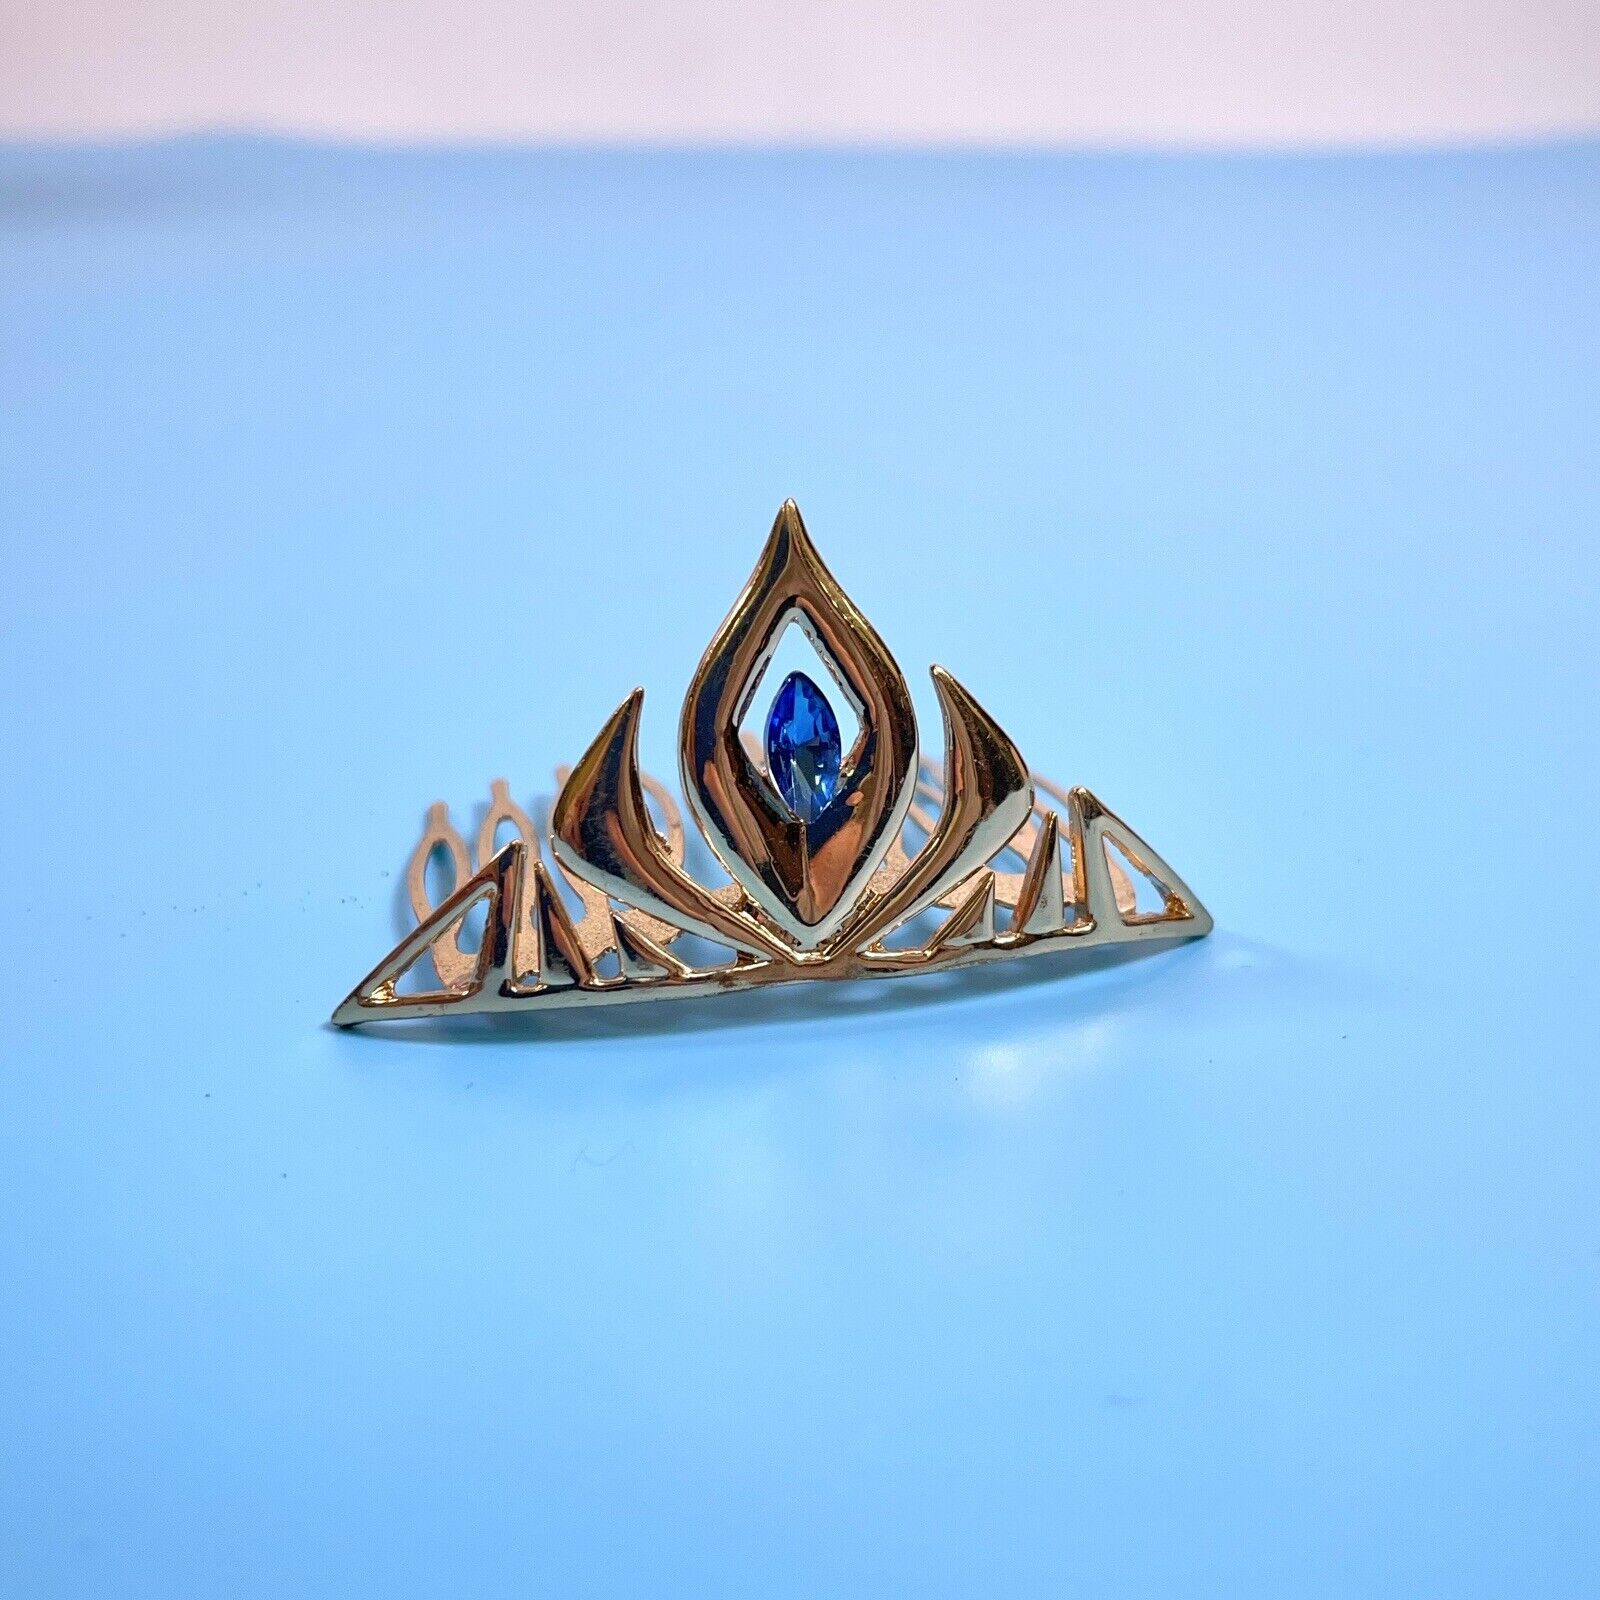 Disney Elsa Frozen Coronation crown Tiara gold Color with teal gemstone Kuzhi